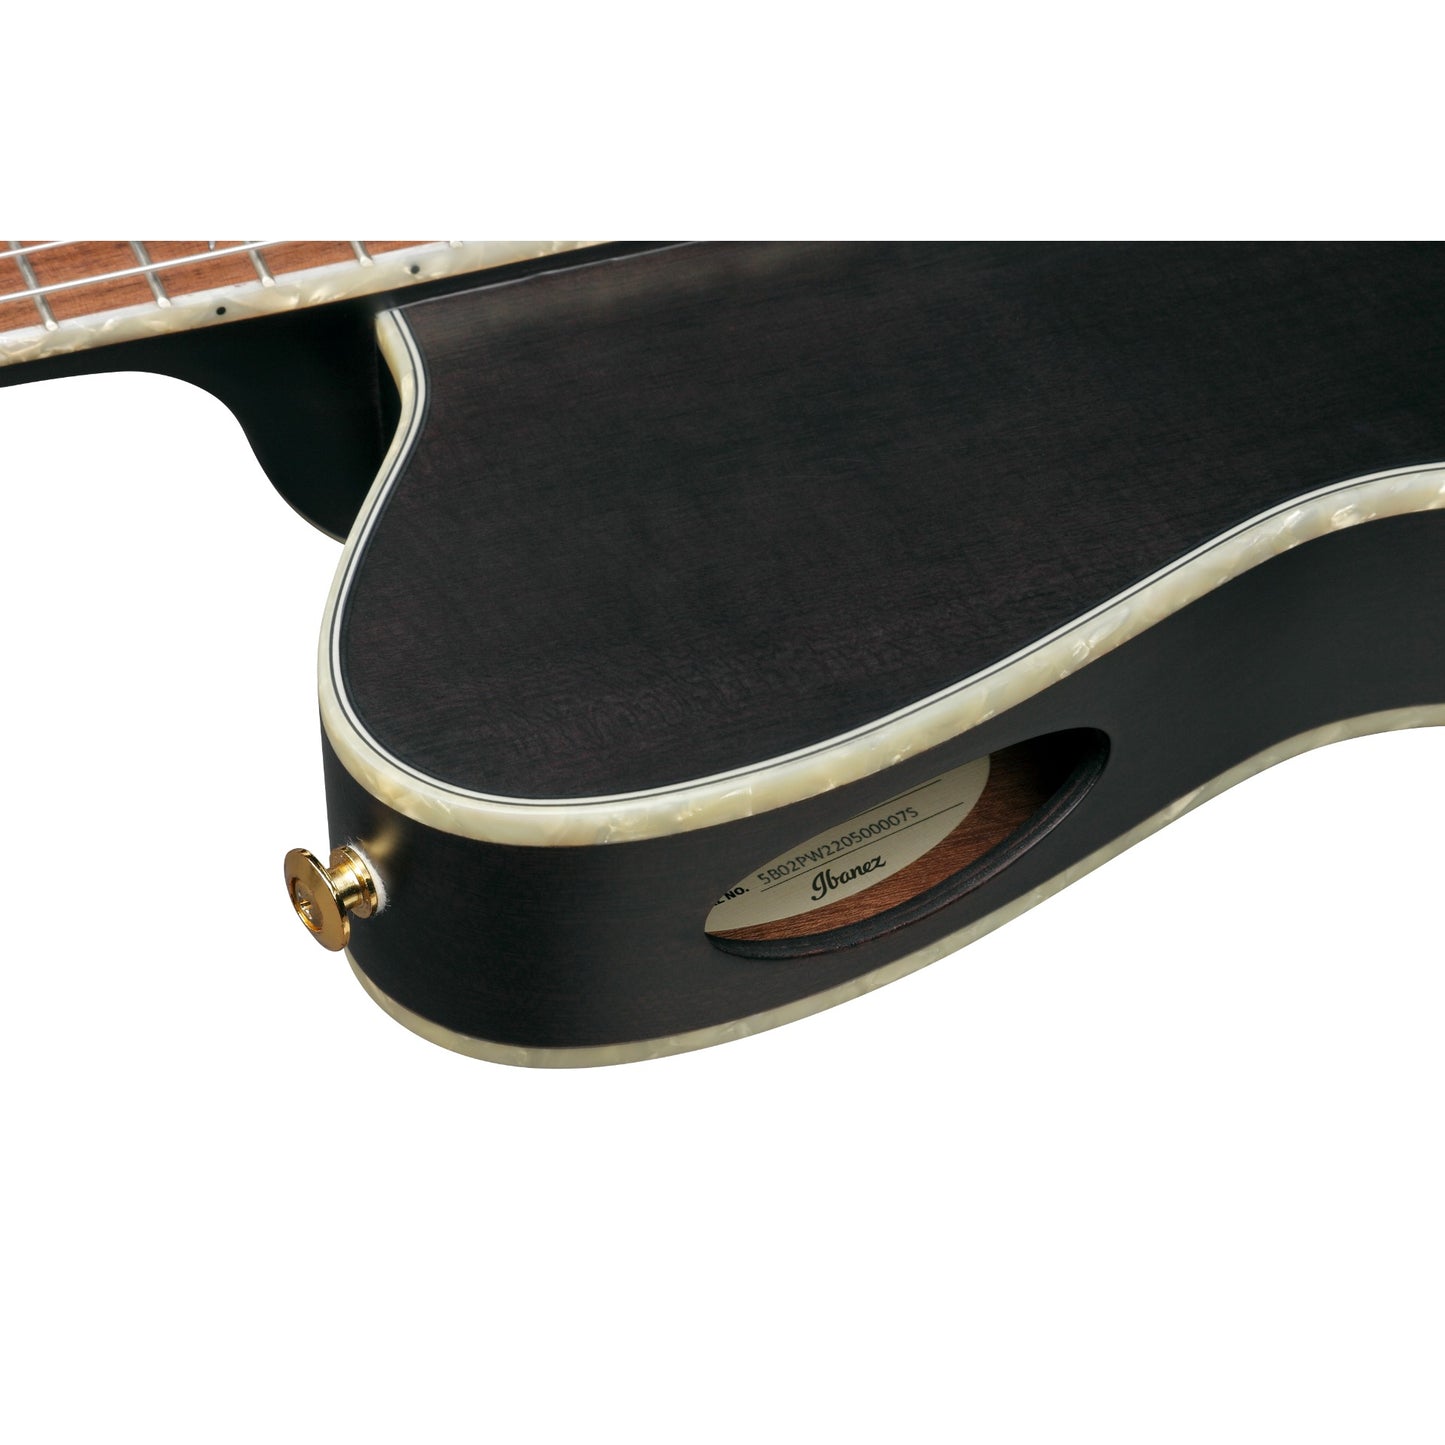 Ibanez TOD10N Tim Henson Signature Nylon Guitar in Transparent Black Flat